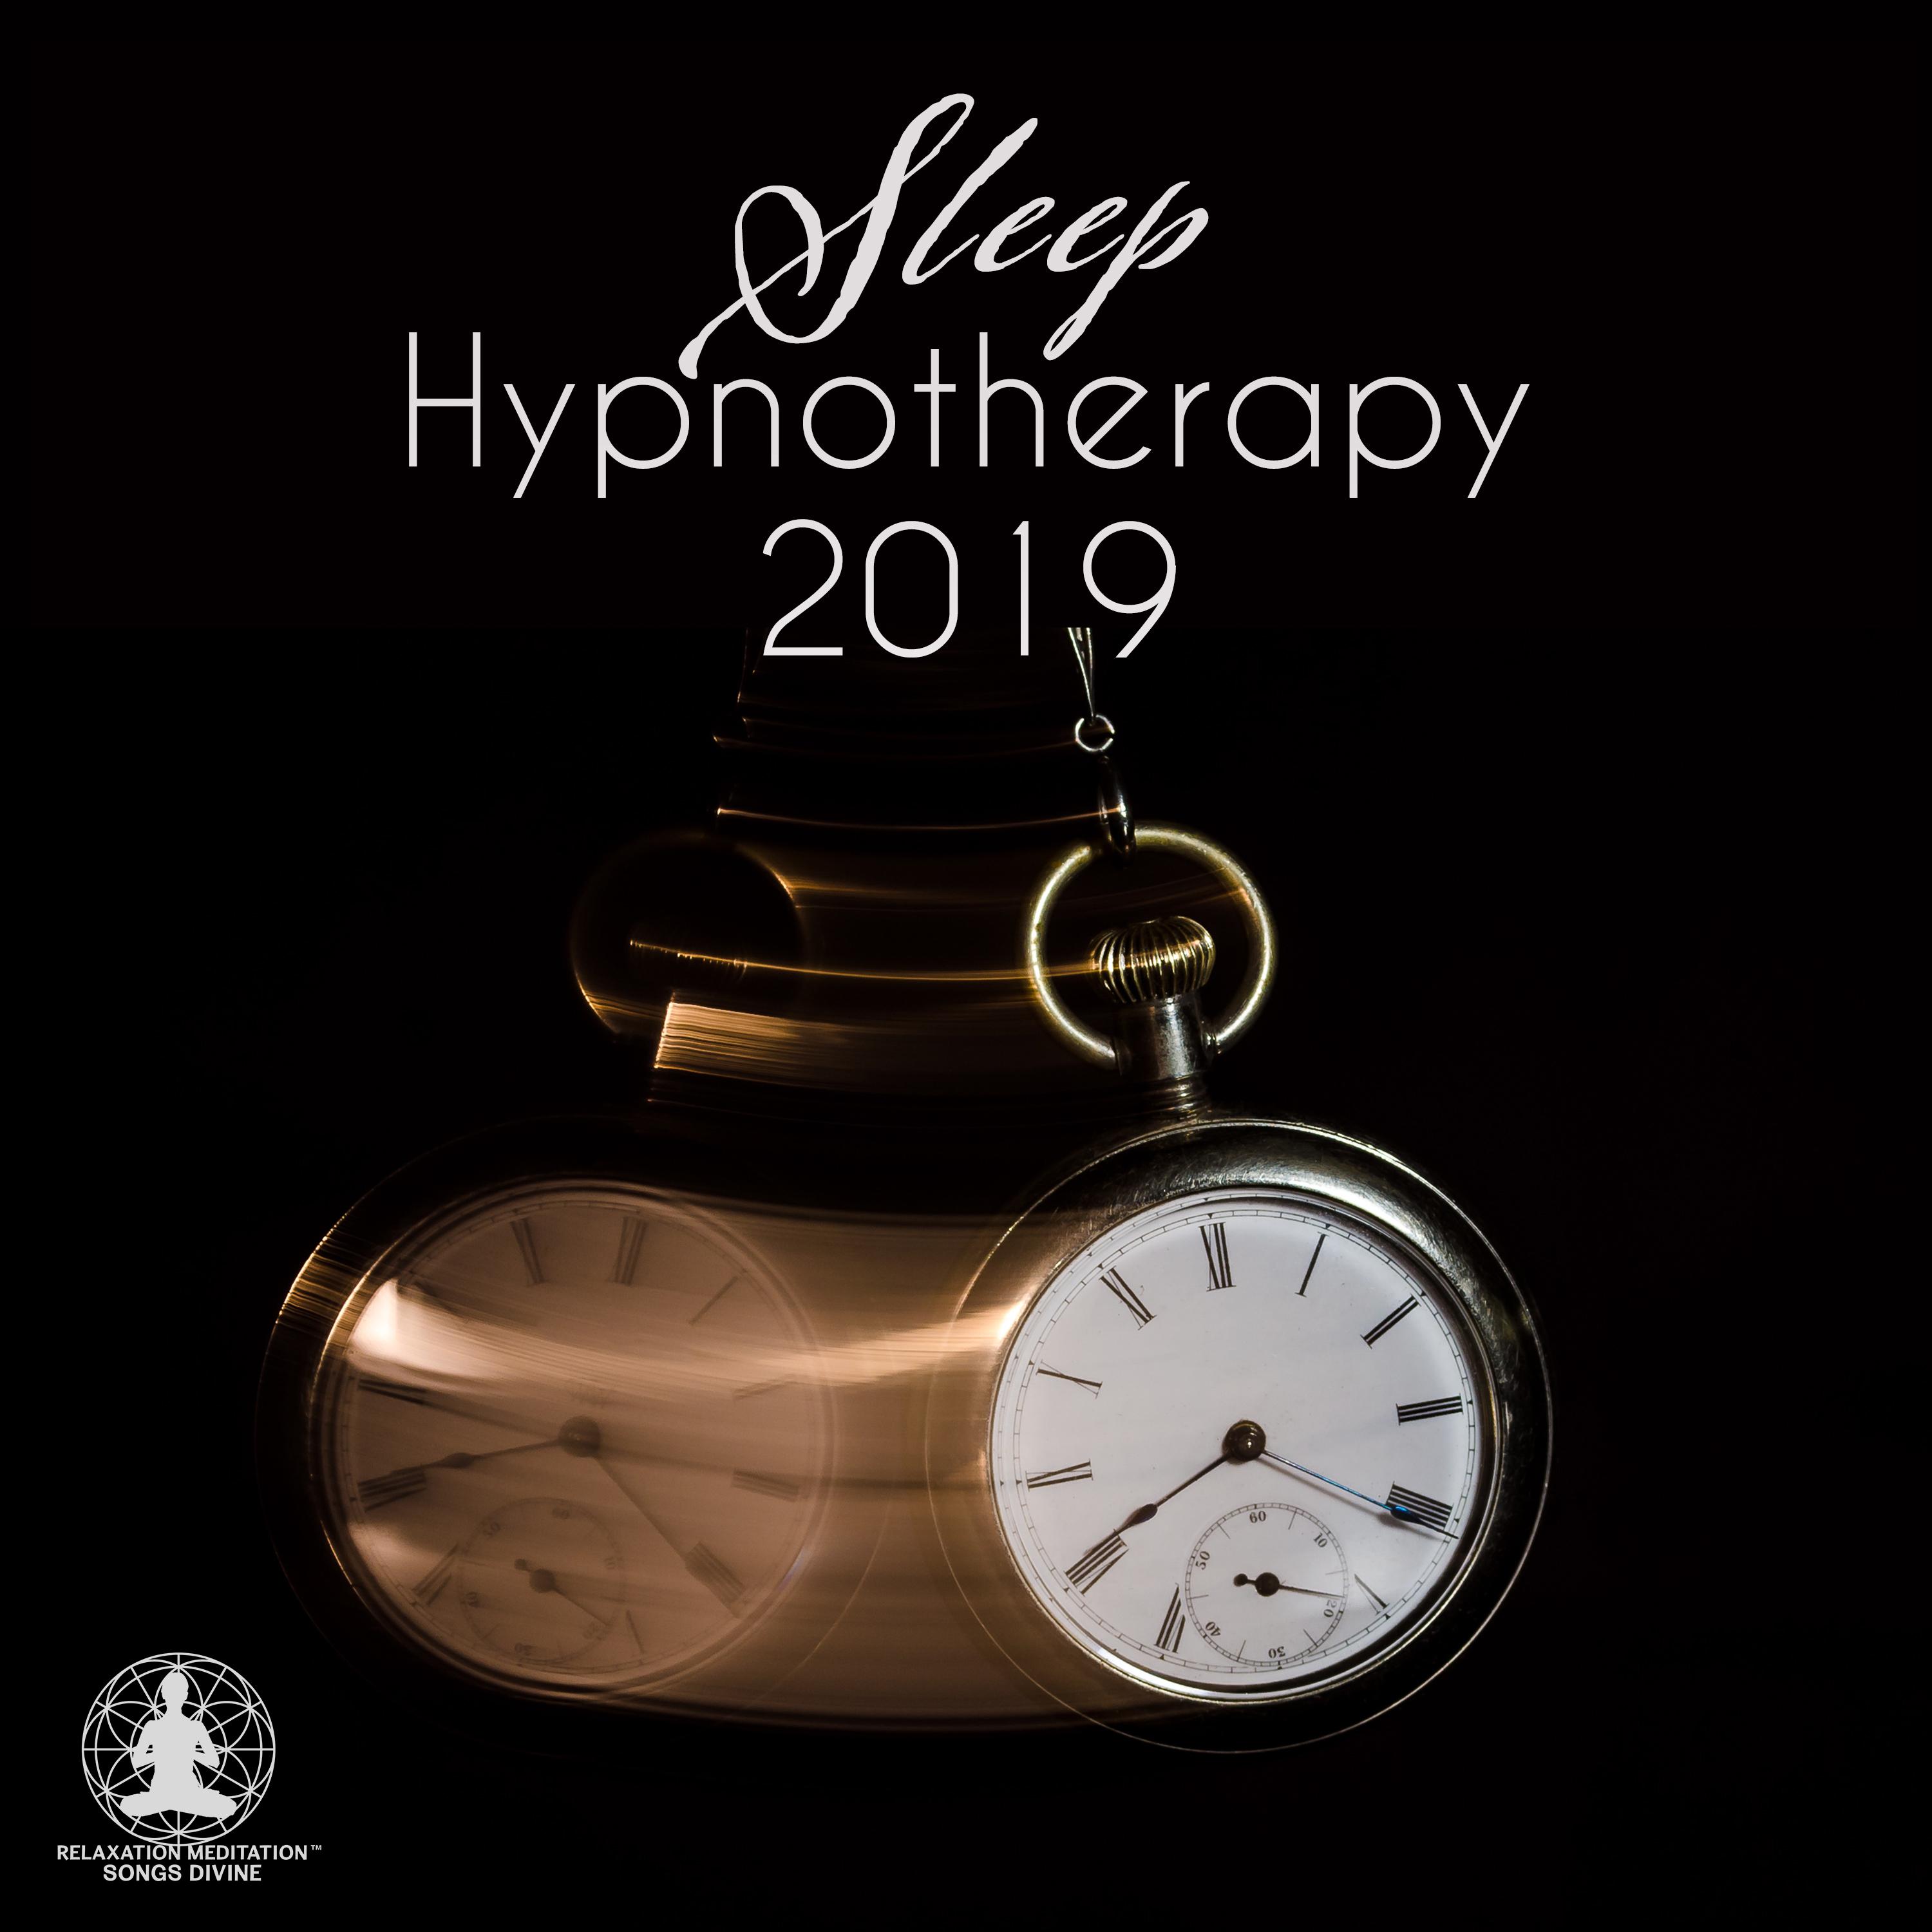 Sleep Hypnotherapy 2019